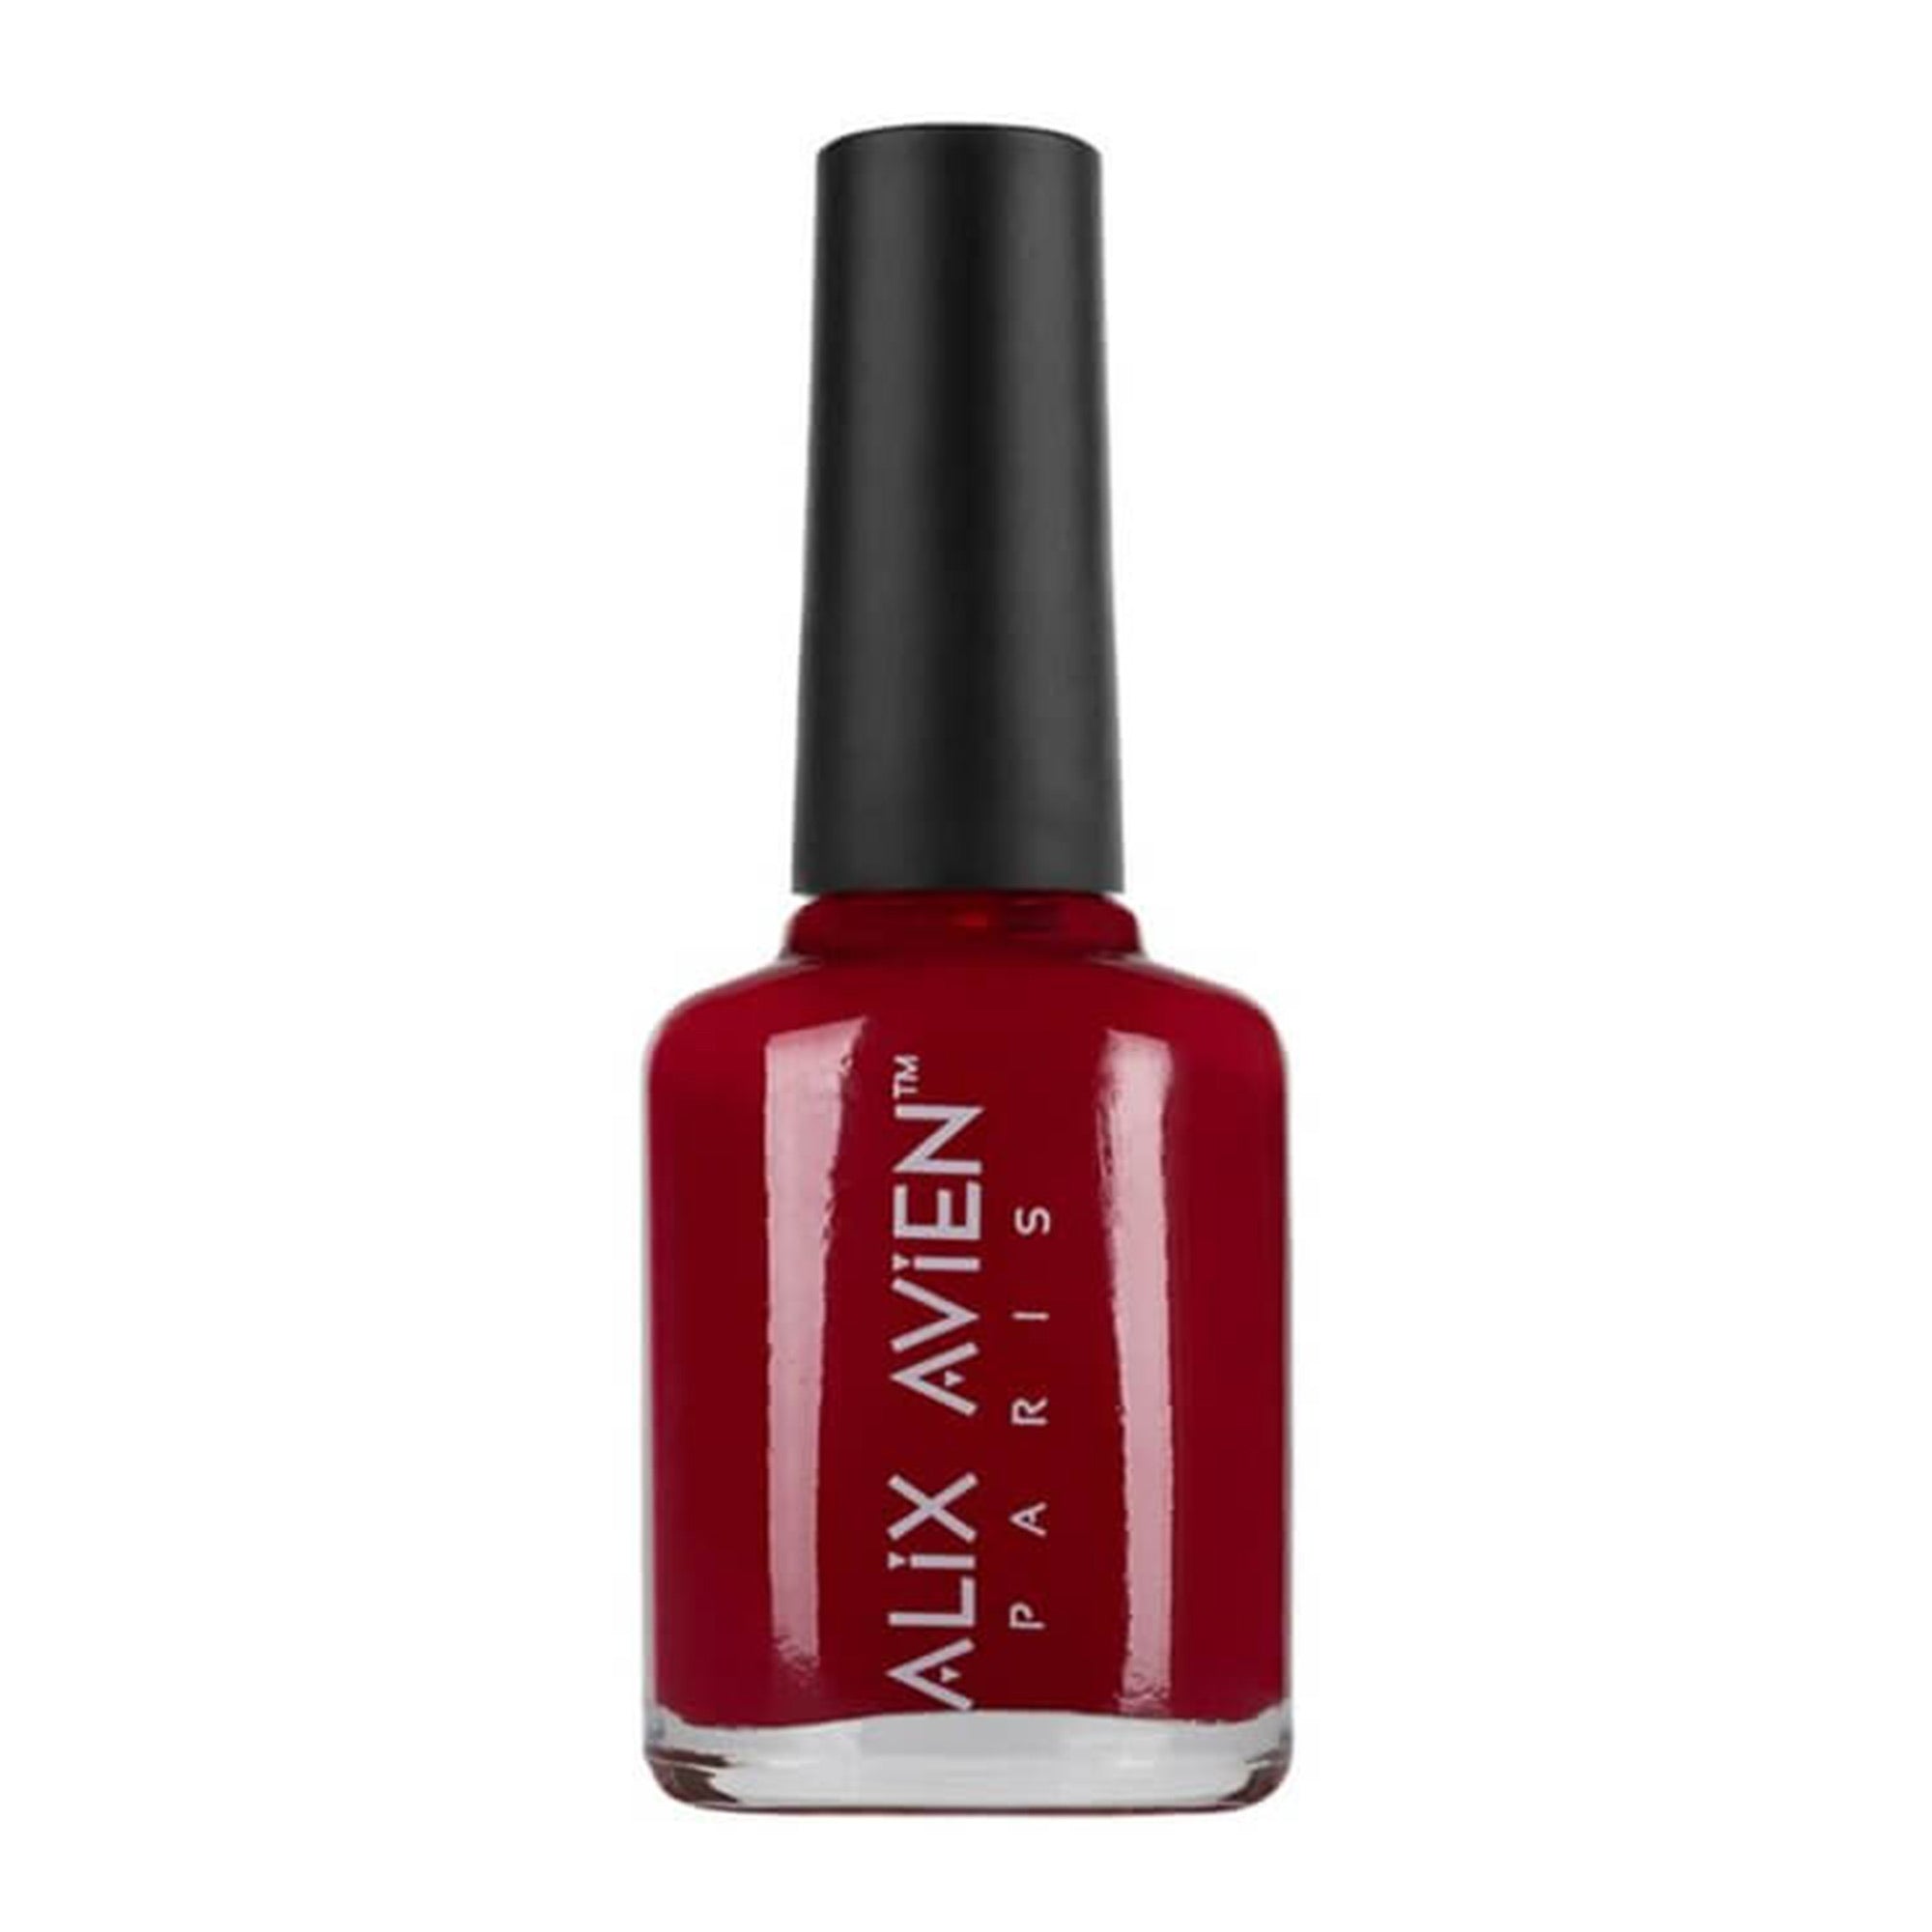 Alix Avien - Nail Polish No.16 (Cherry Red)